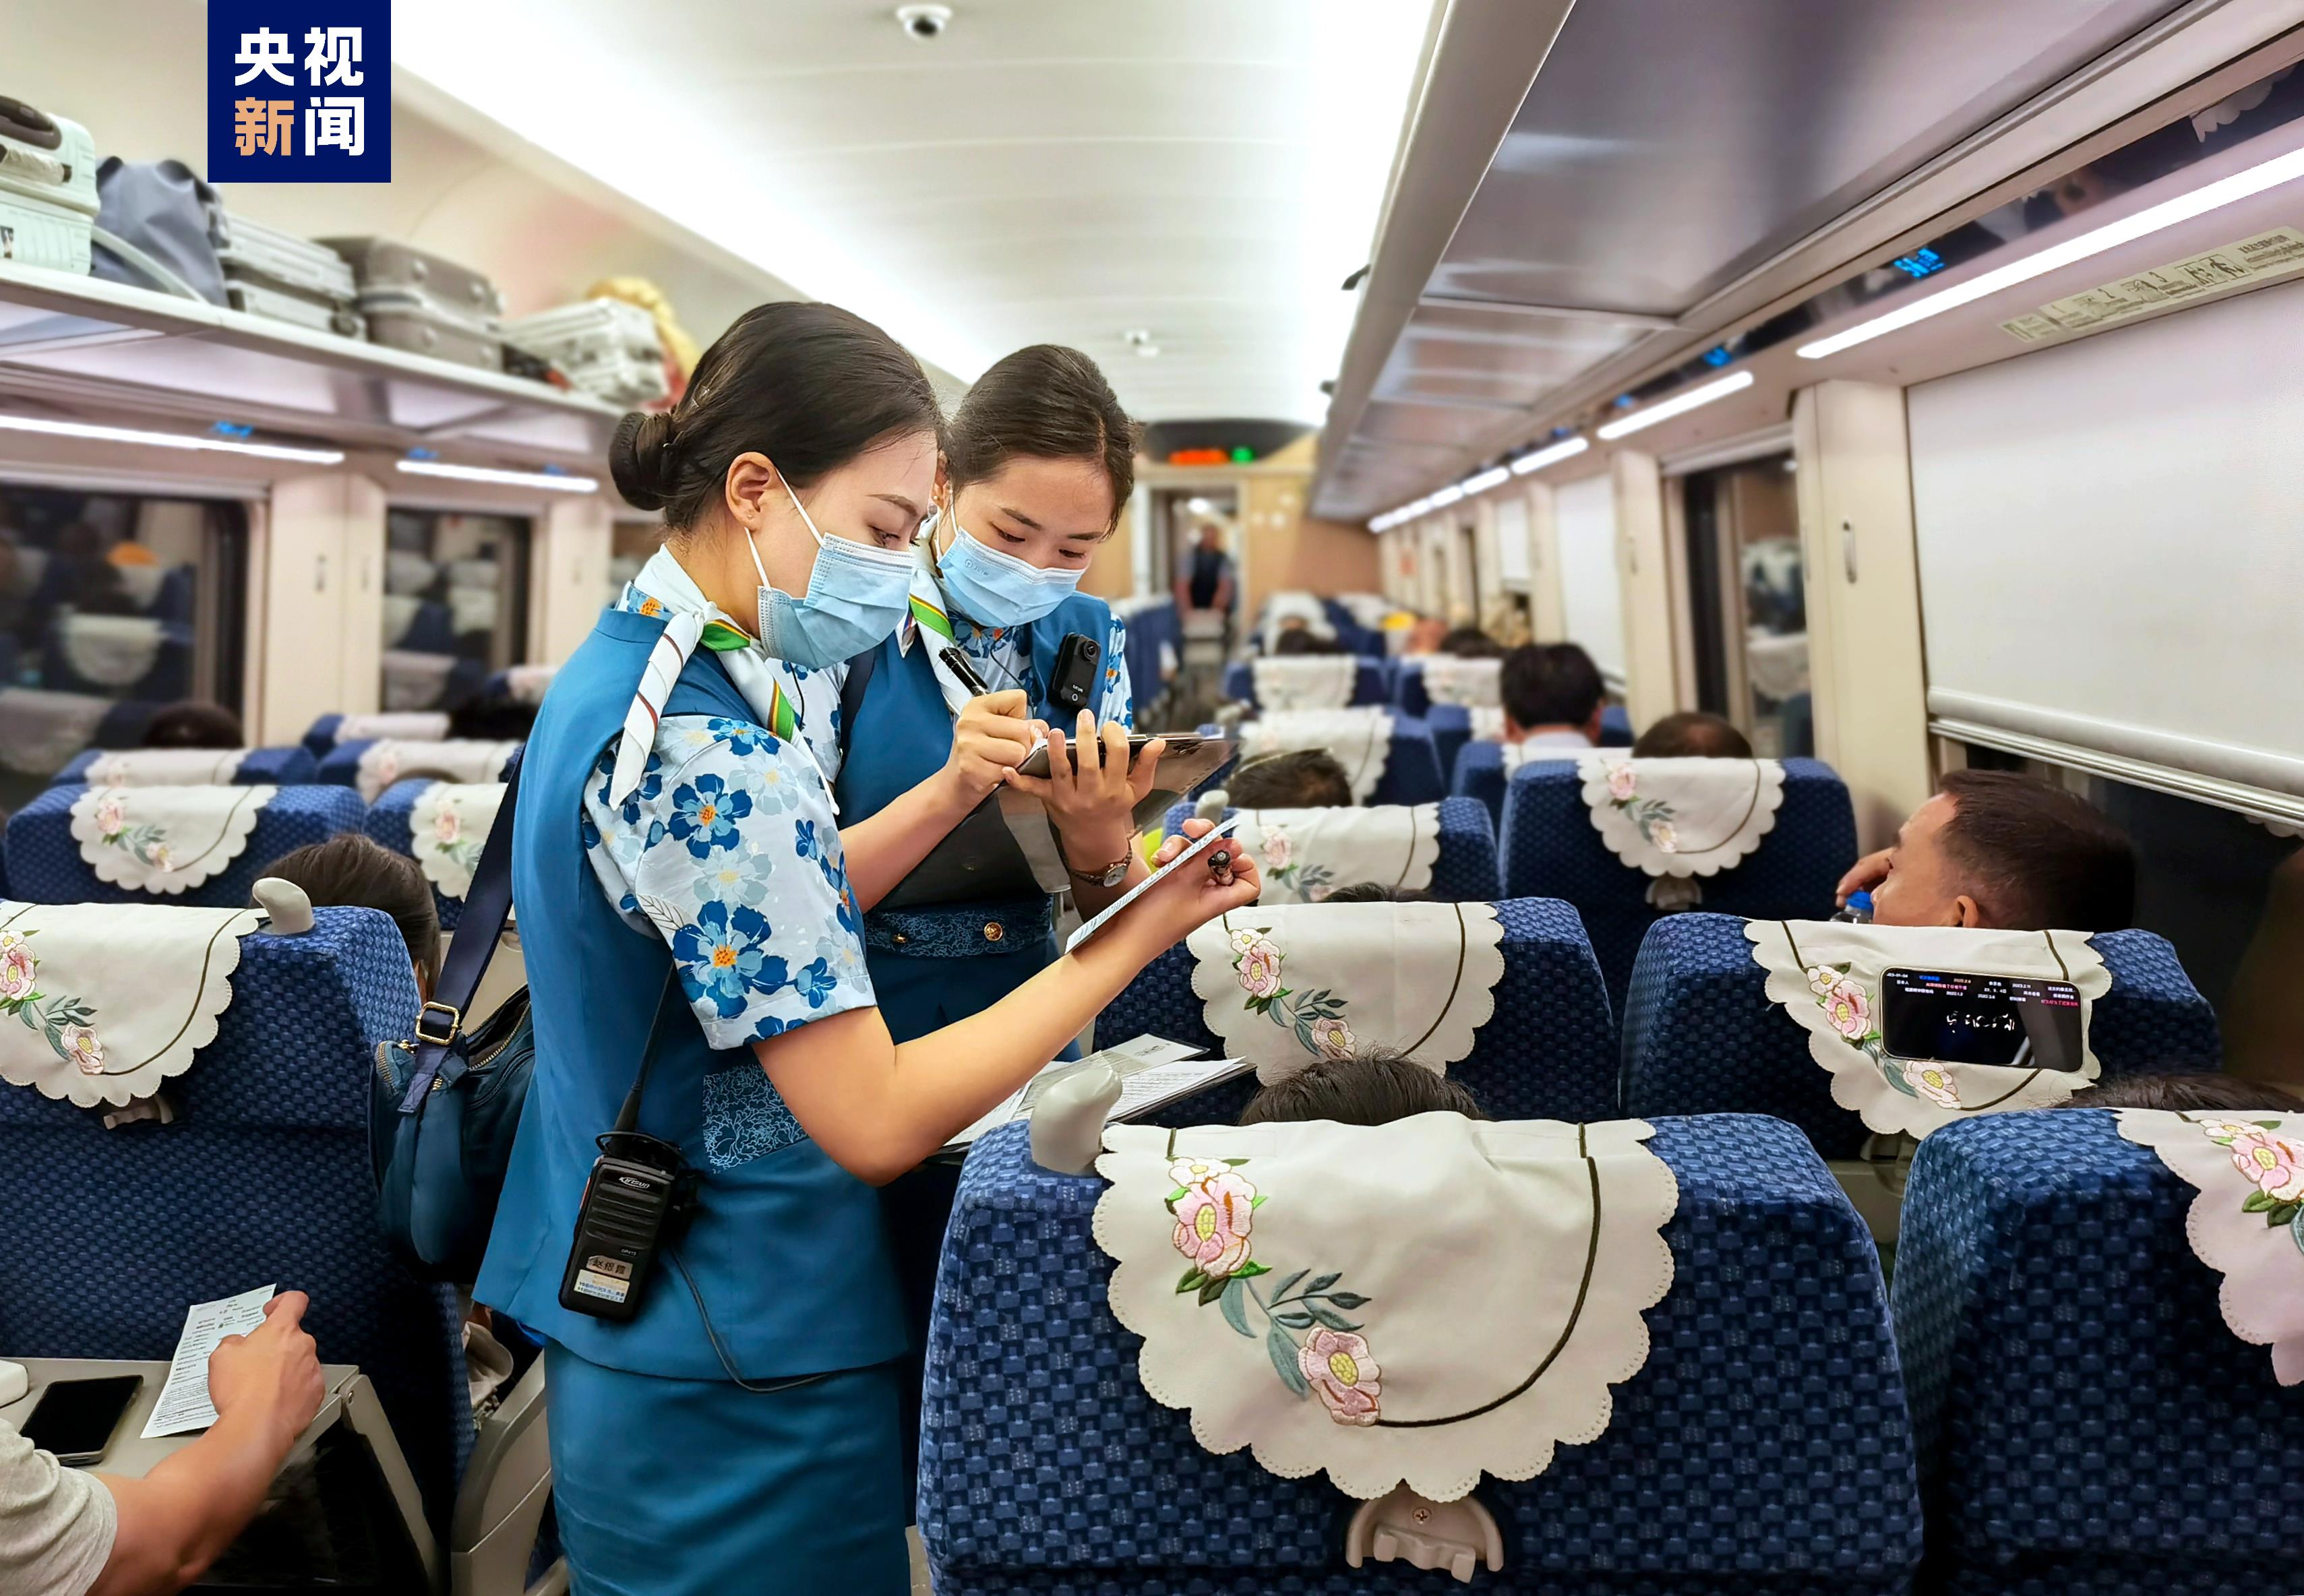 Staff members serve passengers on train. /China Media Group